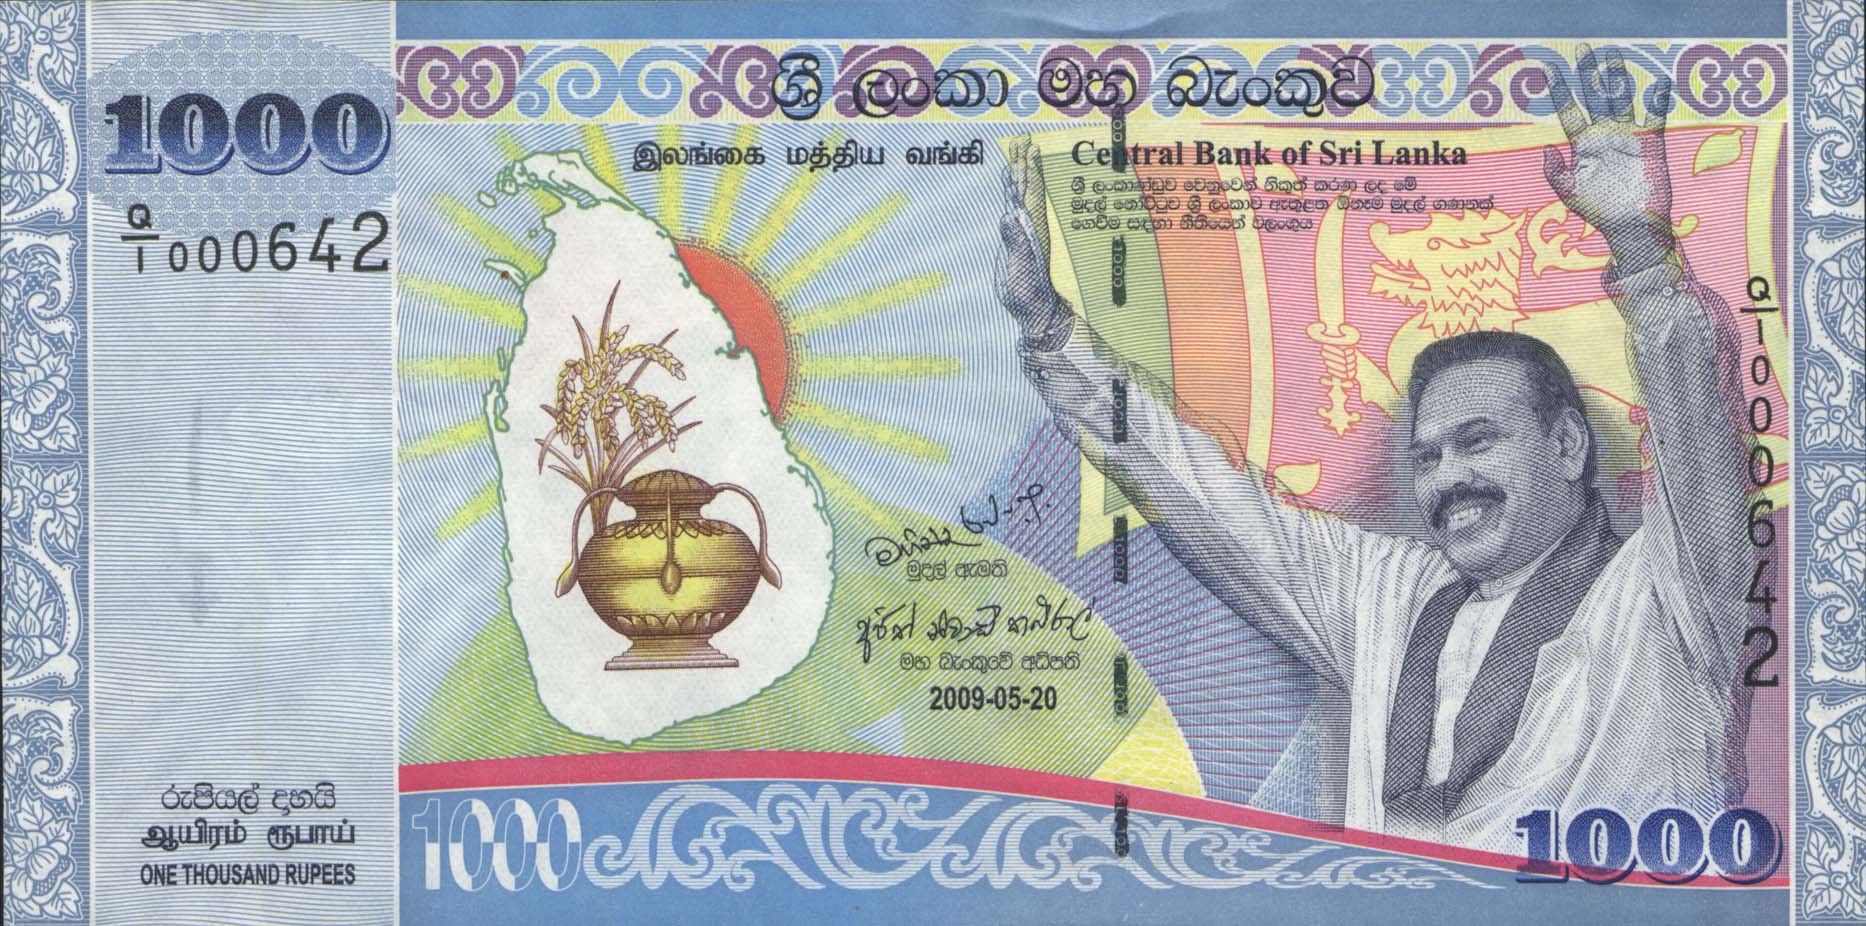 Image result for sri lanka 1000 rupees note